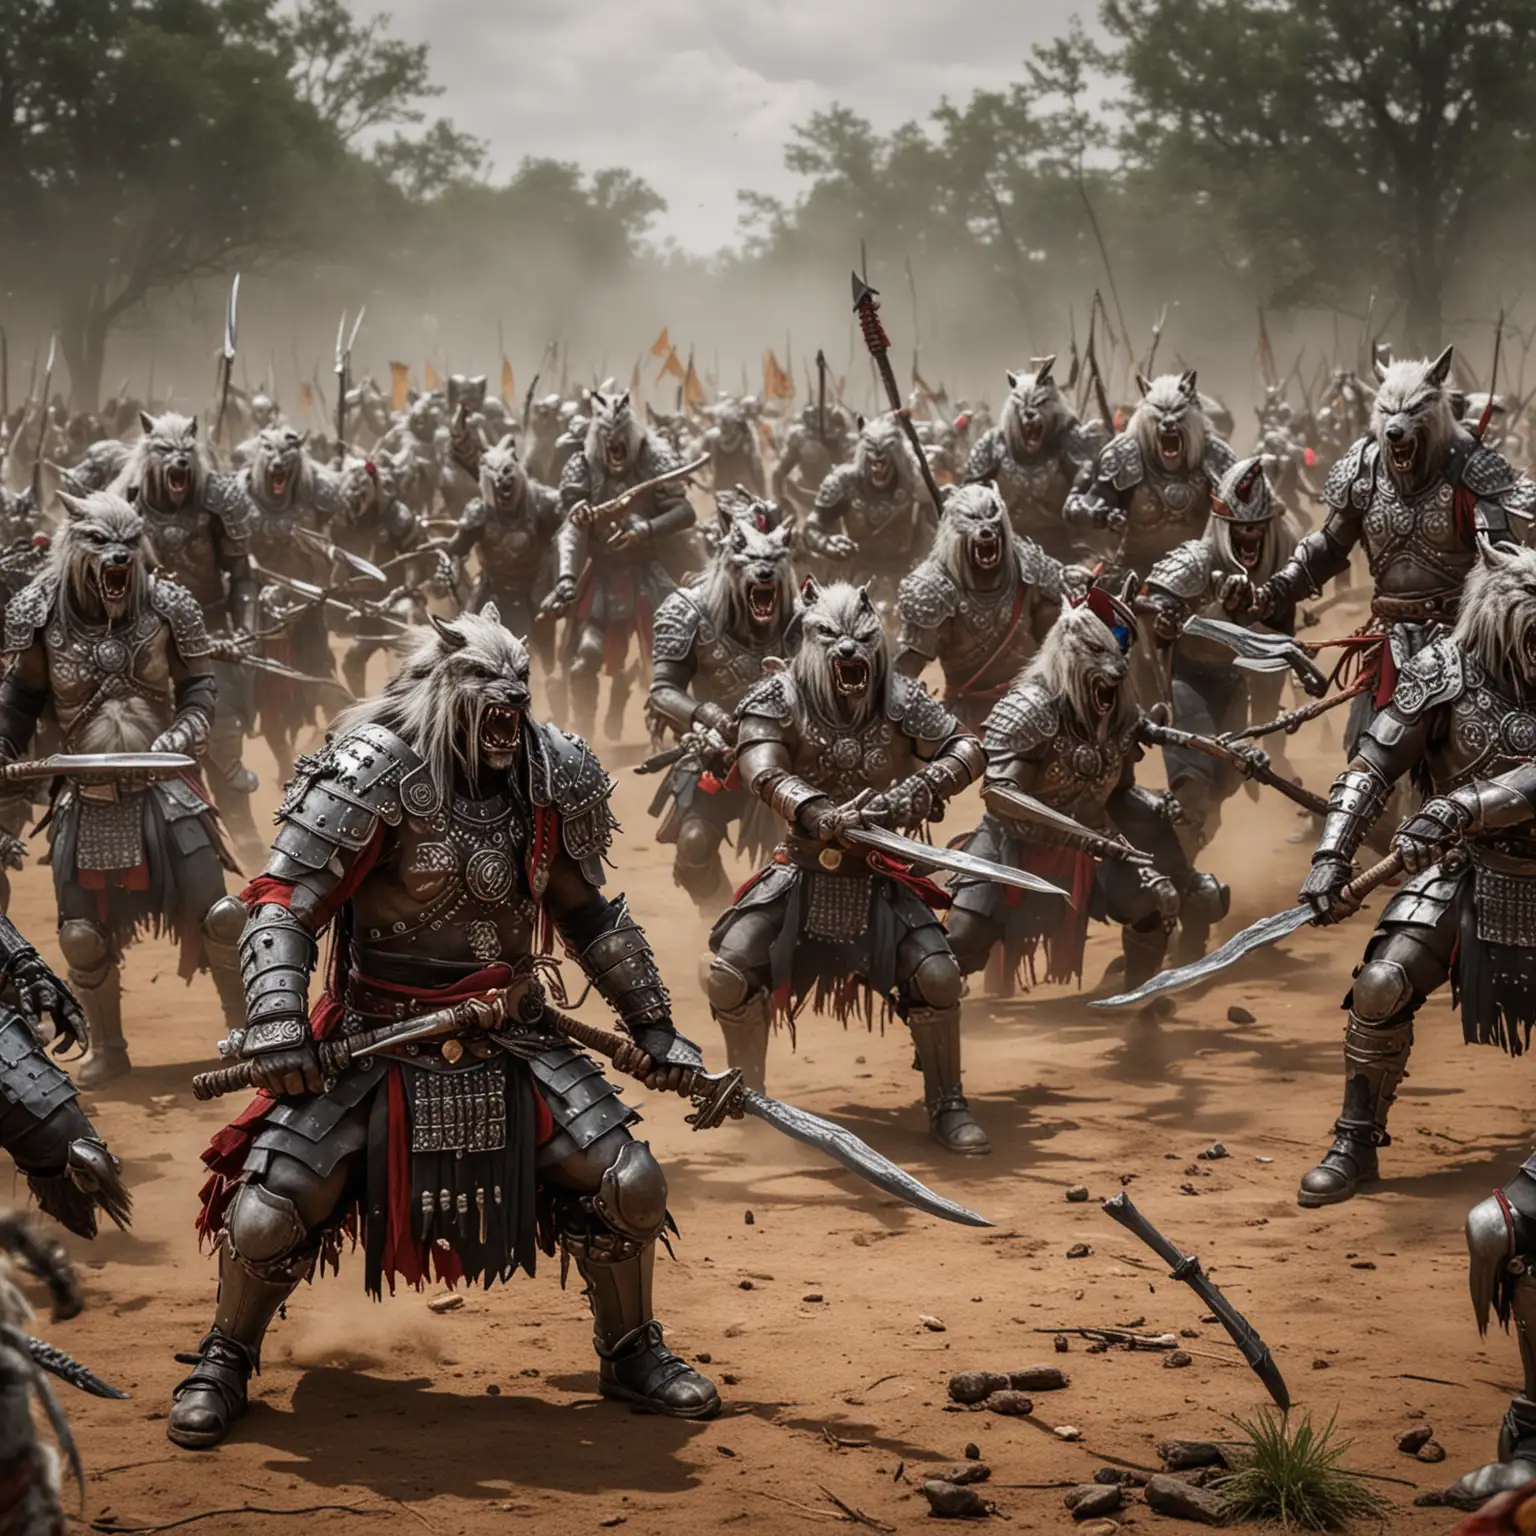 Ching changa wolves versus ironblood warriors